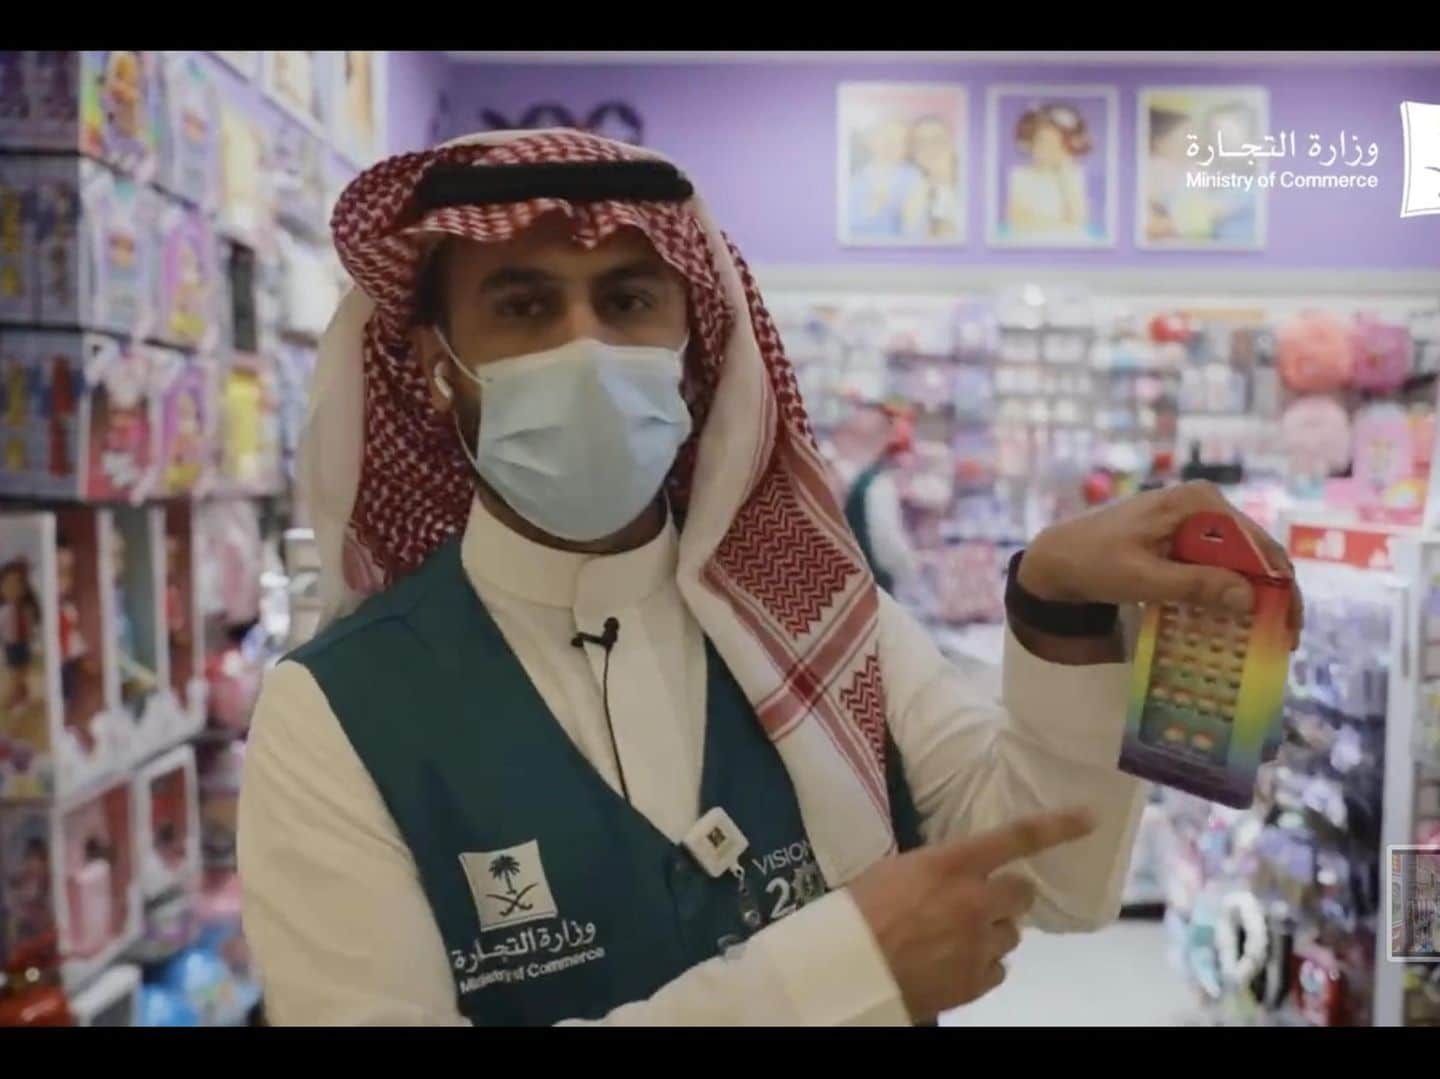 Saudi-Arabien - Regenbogen Spielzeug beschlagnahmt